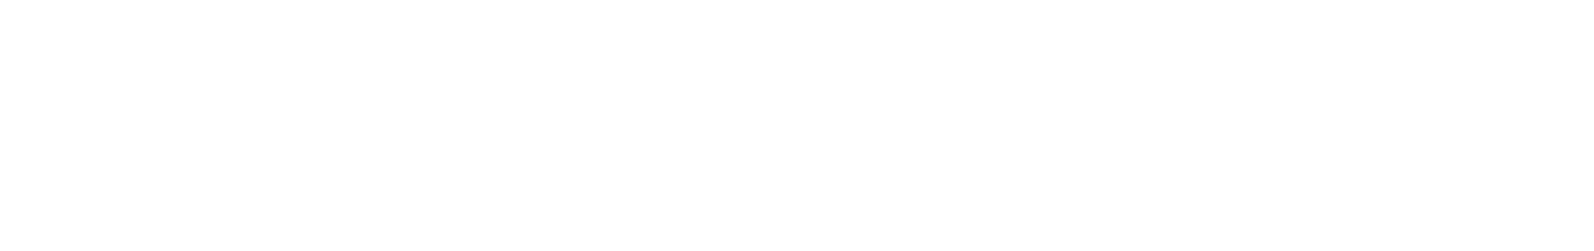 Allied Group Limited logo large for dark backgrounds (transparent PNG)